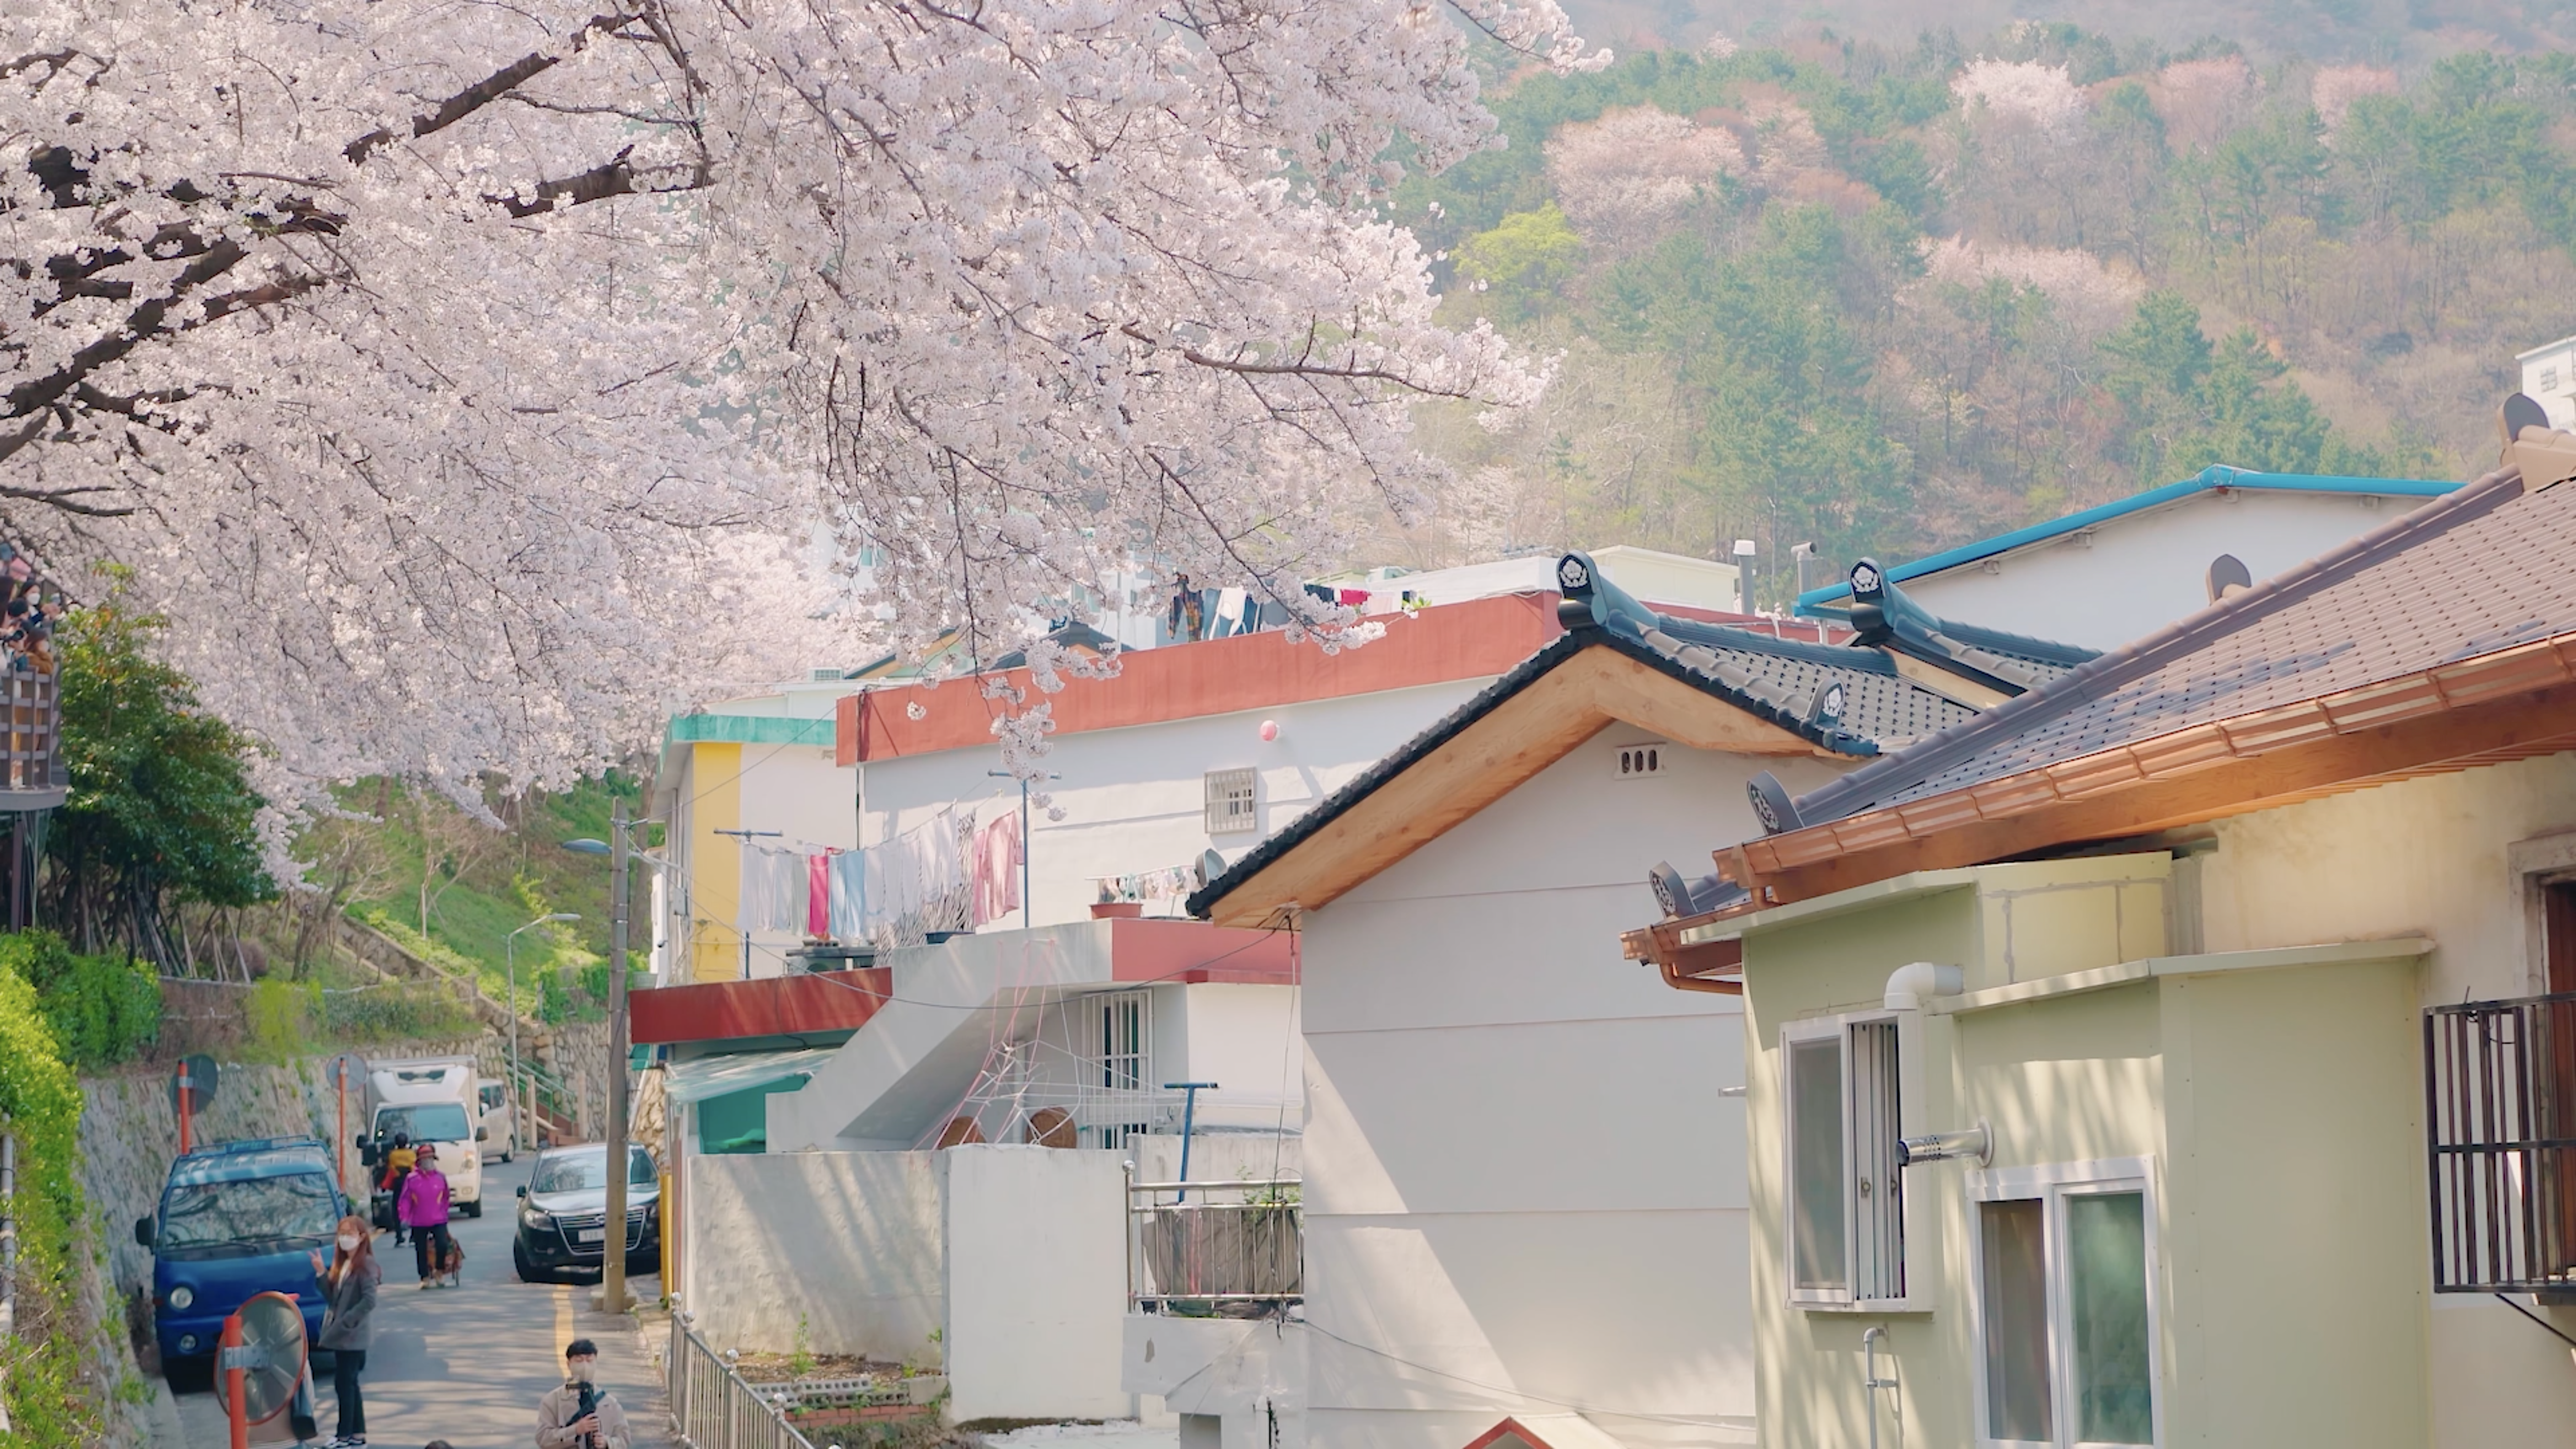 Town in Cherry blossom season